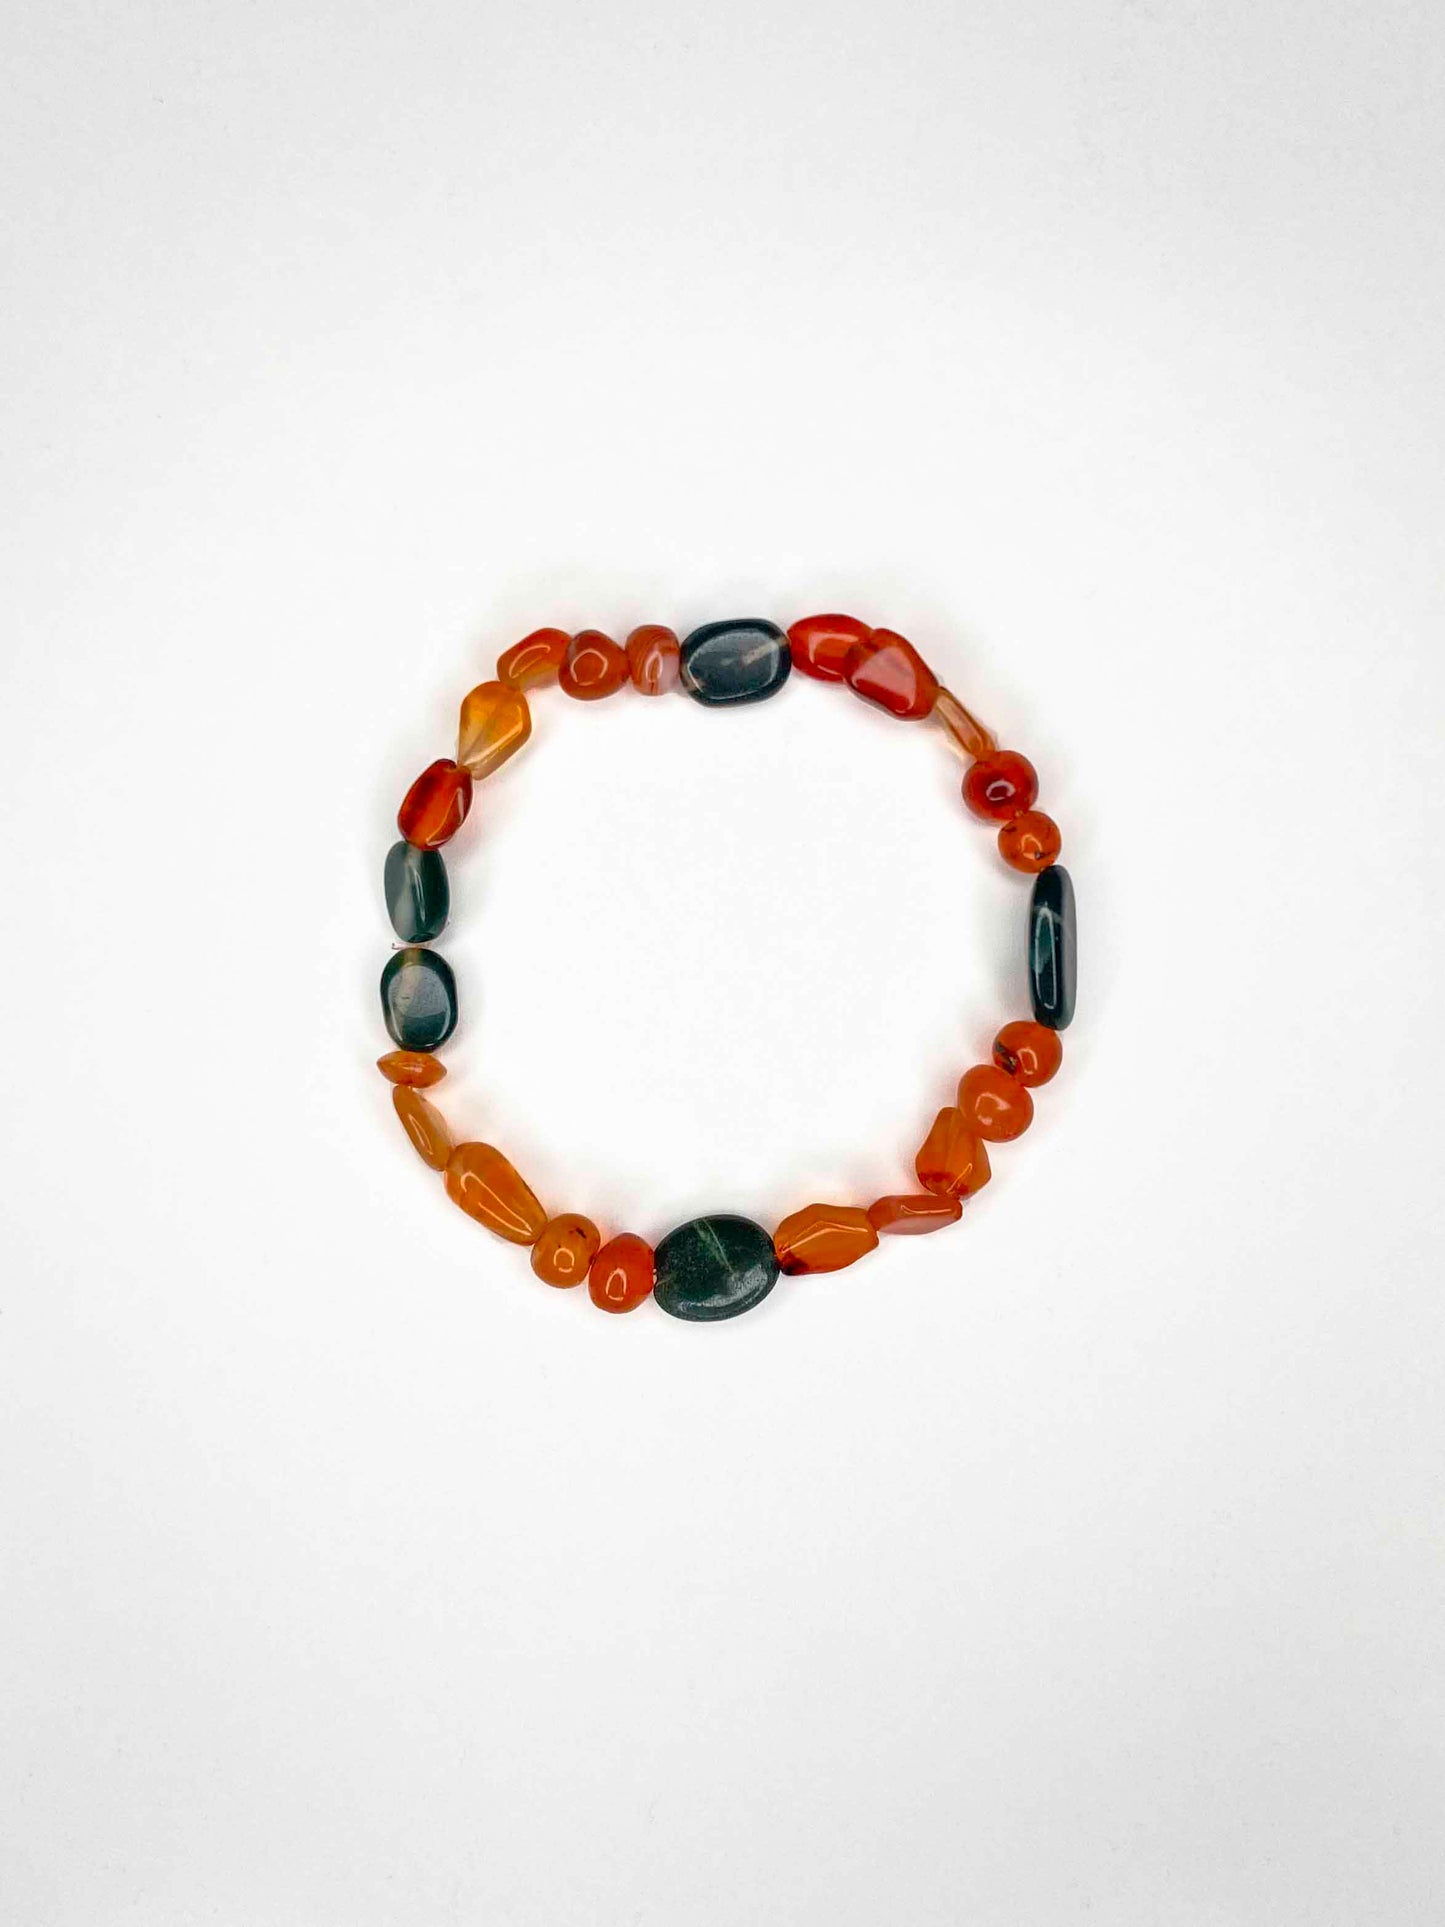 Handcrafted bracelet made using carnelian beads. 